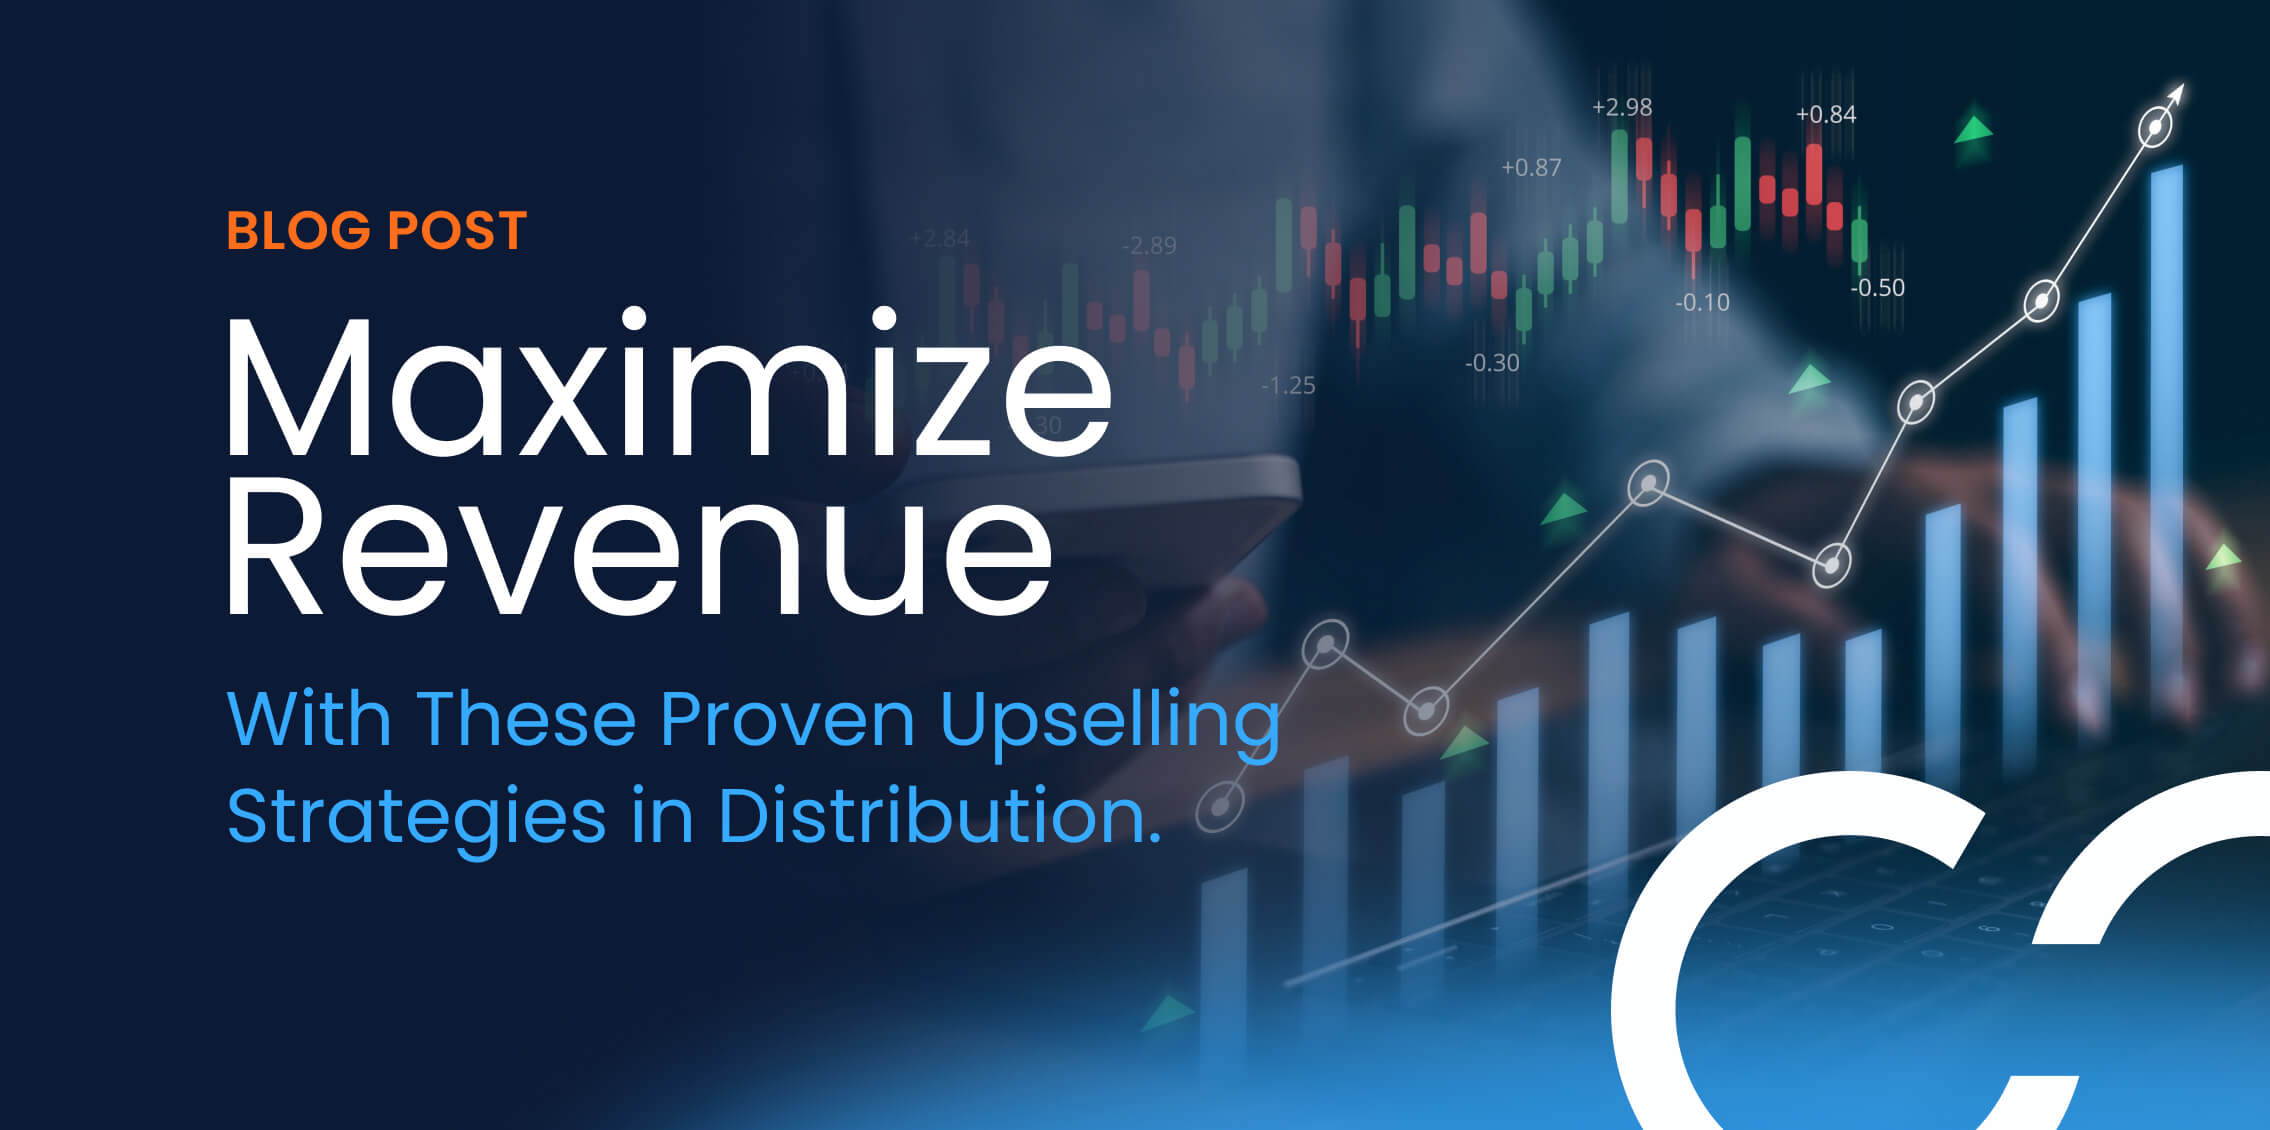 upselling strategies in distribution boost revenue